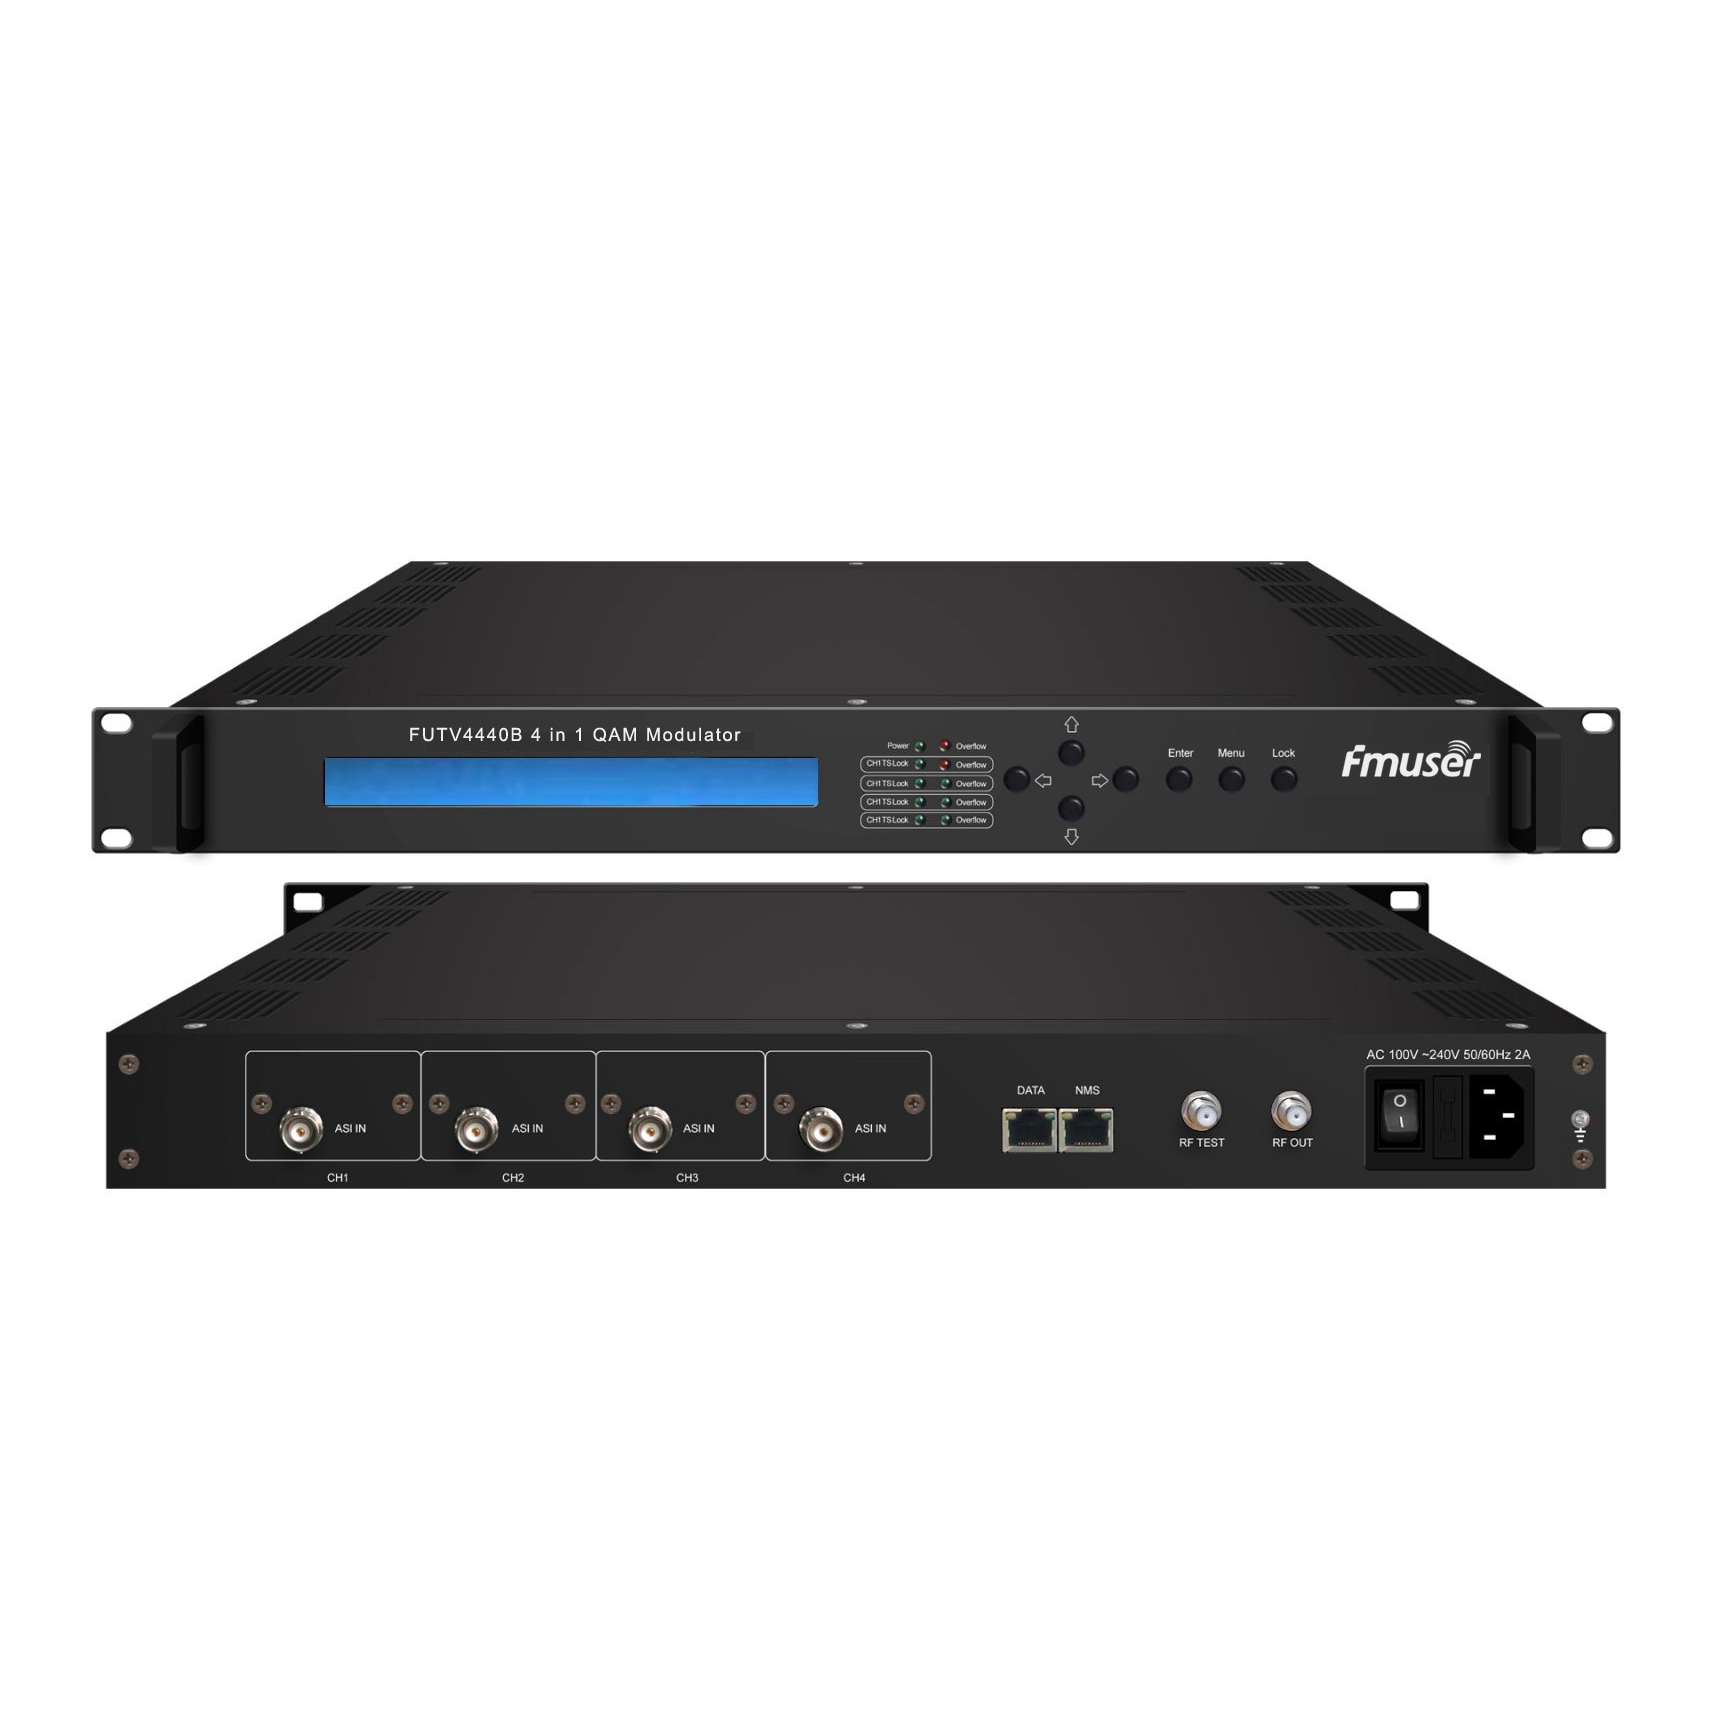 FMUSER FUTV4440B 4 1 ใน QAM Modulator (ตัวเลือก 4 * ASI / 4 * QAM / 4 * DVB-S จูนเนอร์ / 4 * DVB-S2 จูนเนอร์ป้อนข้อมูล RF ขาออก) กับการจัดการเครือข่าย